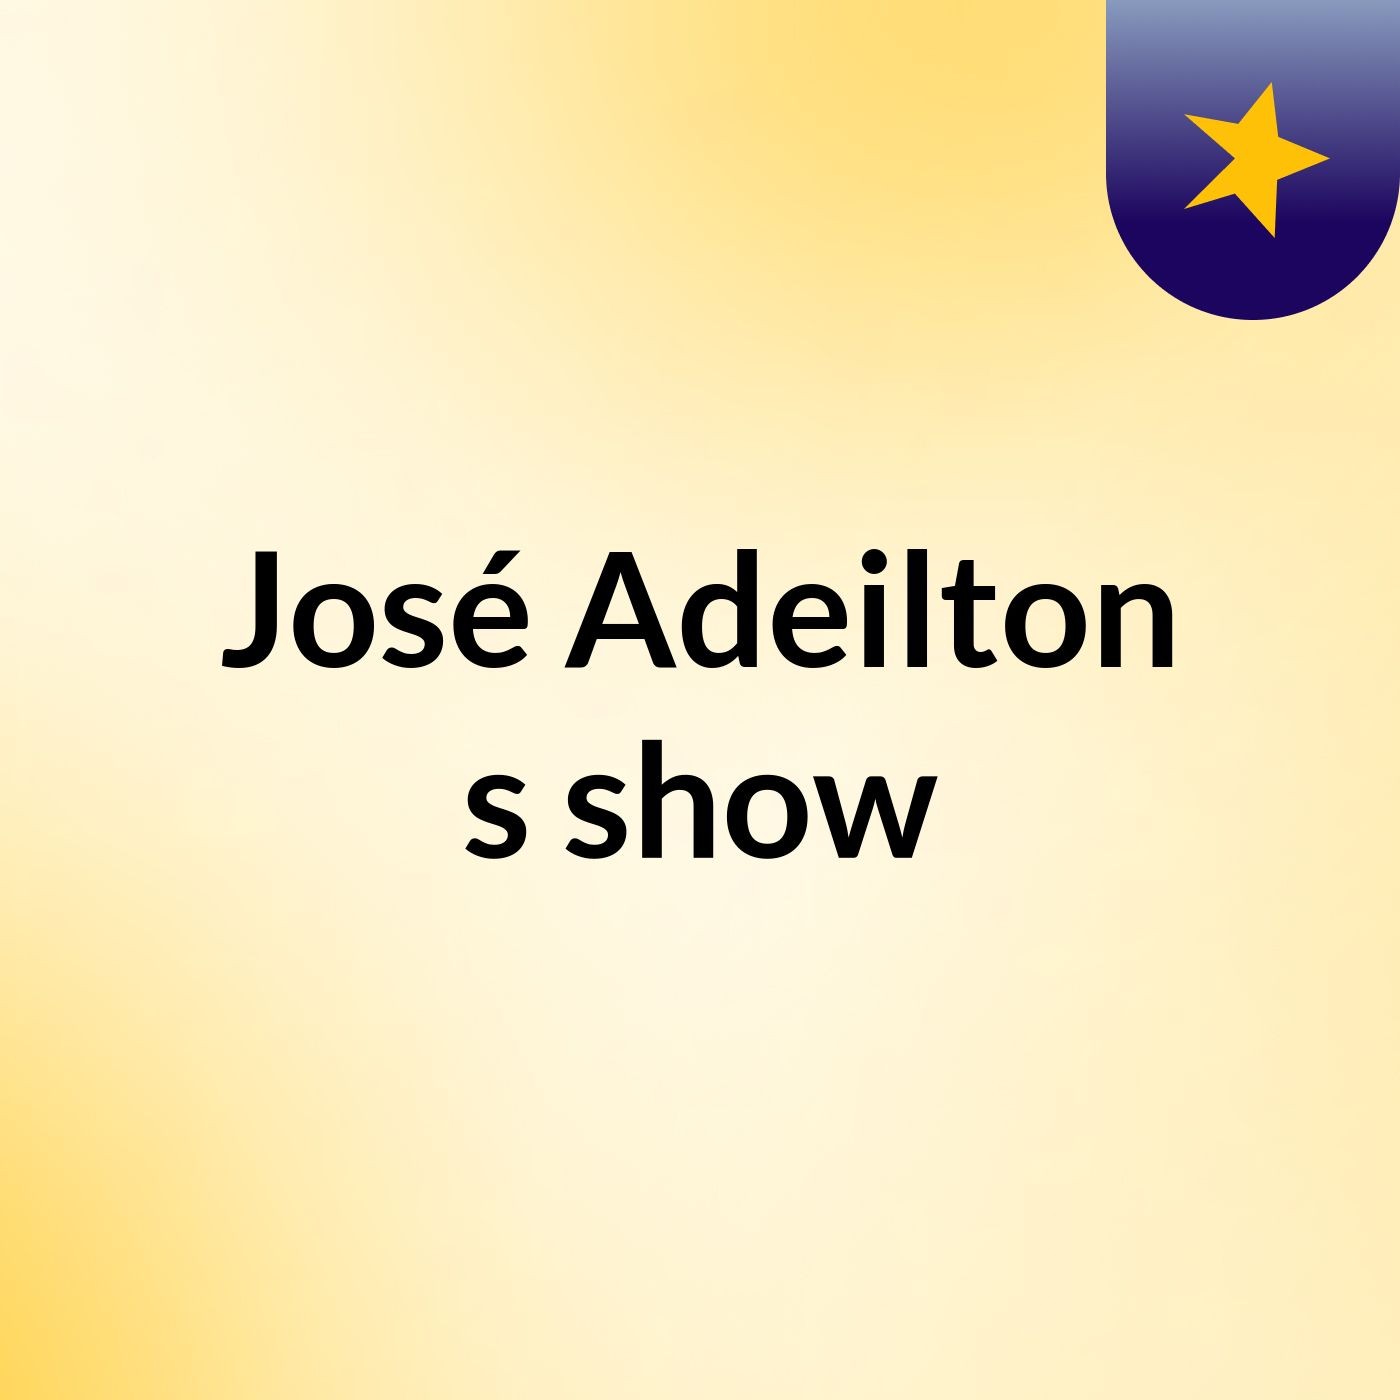 José Adeilton's show